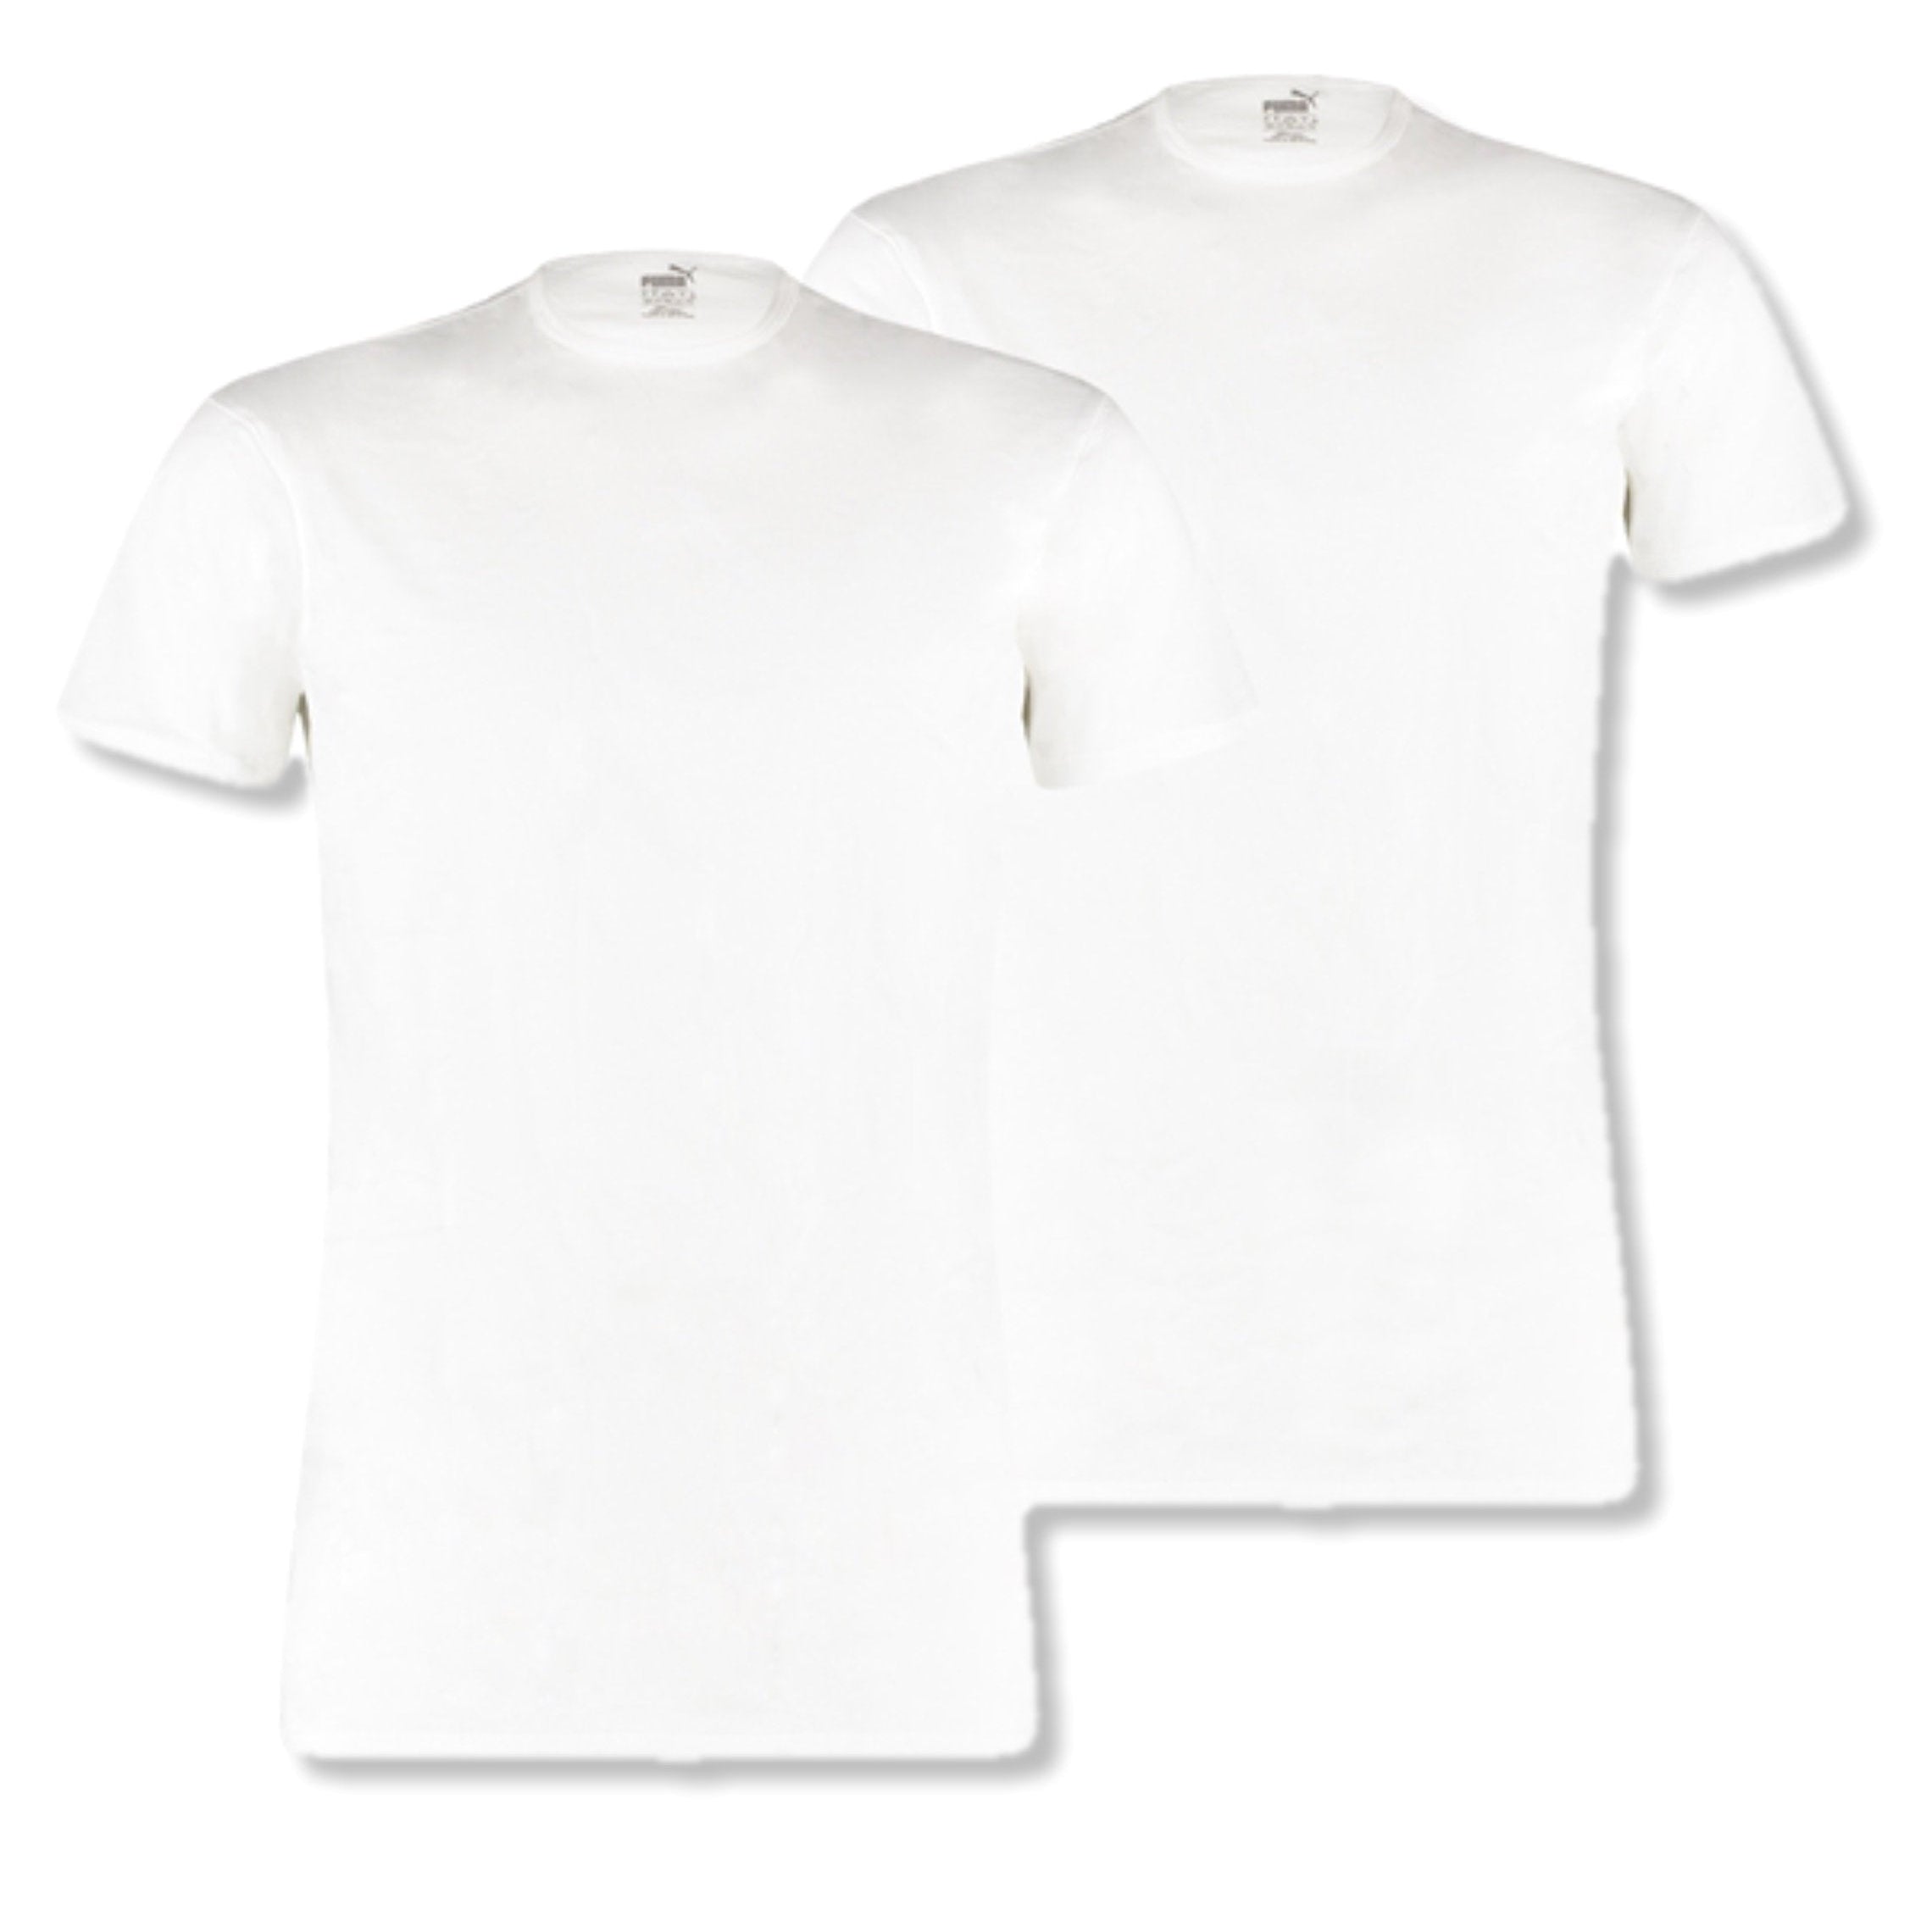 Puma T-Shirt 2 Pack White - Large